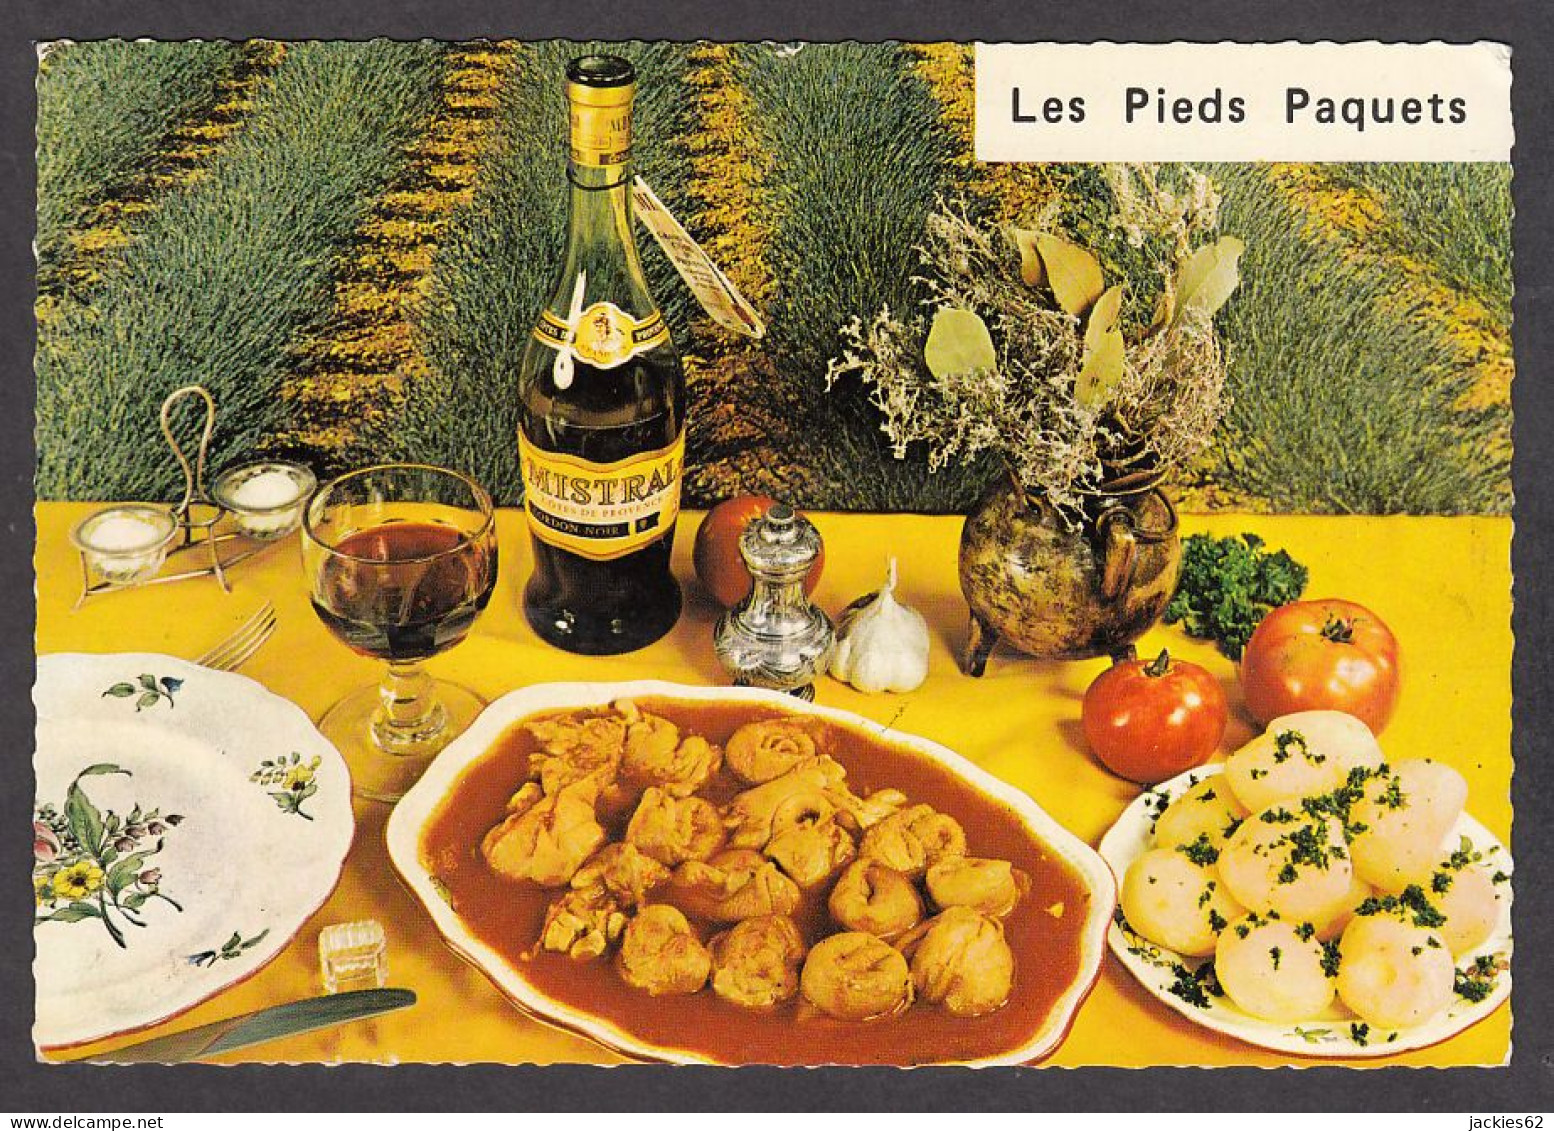 095383/ Les Pieds Paquets - Ricette Di Cucina